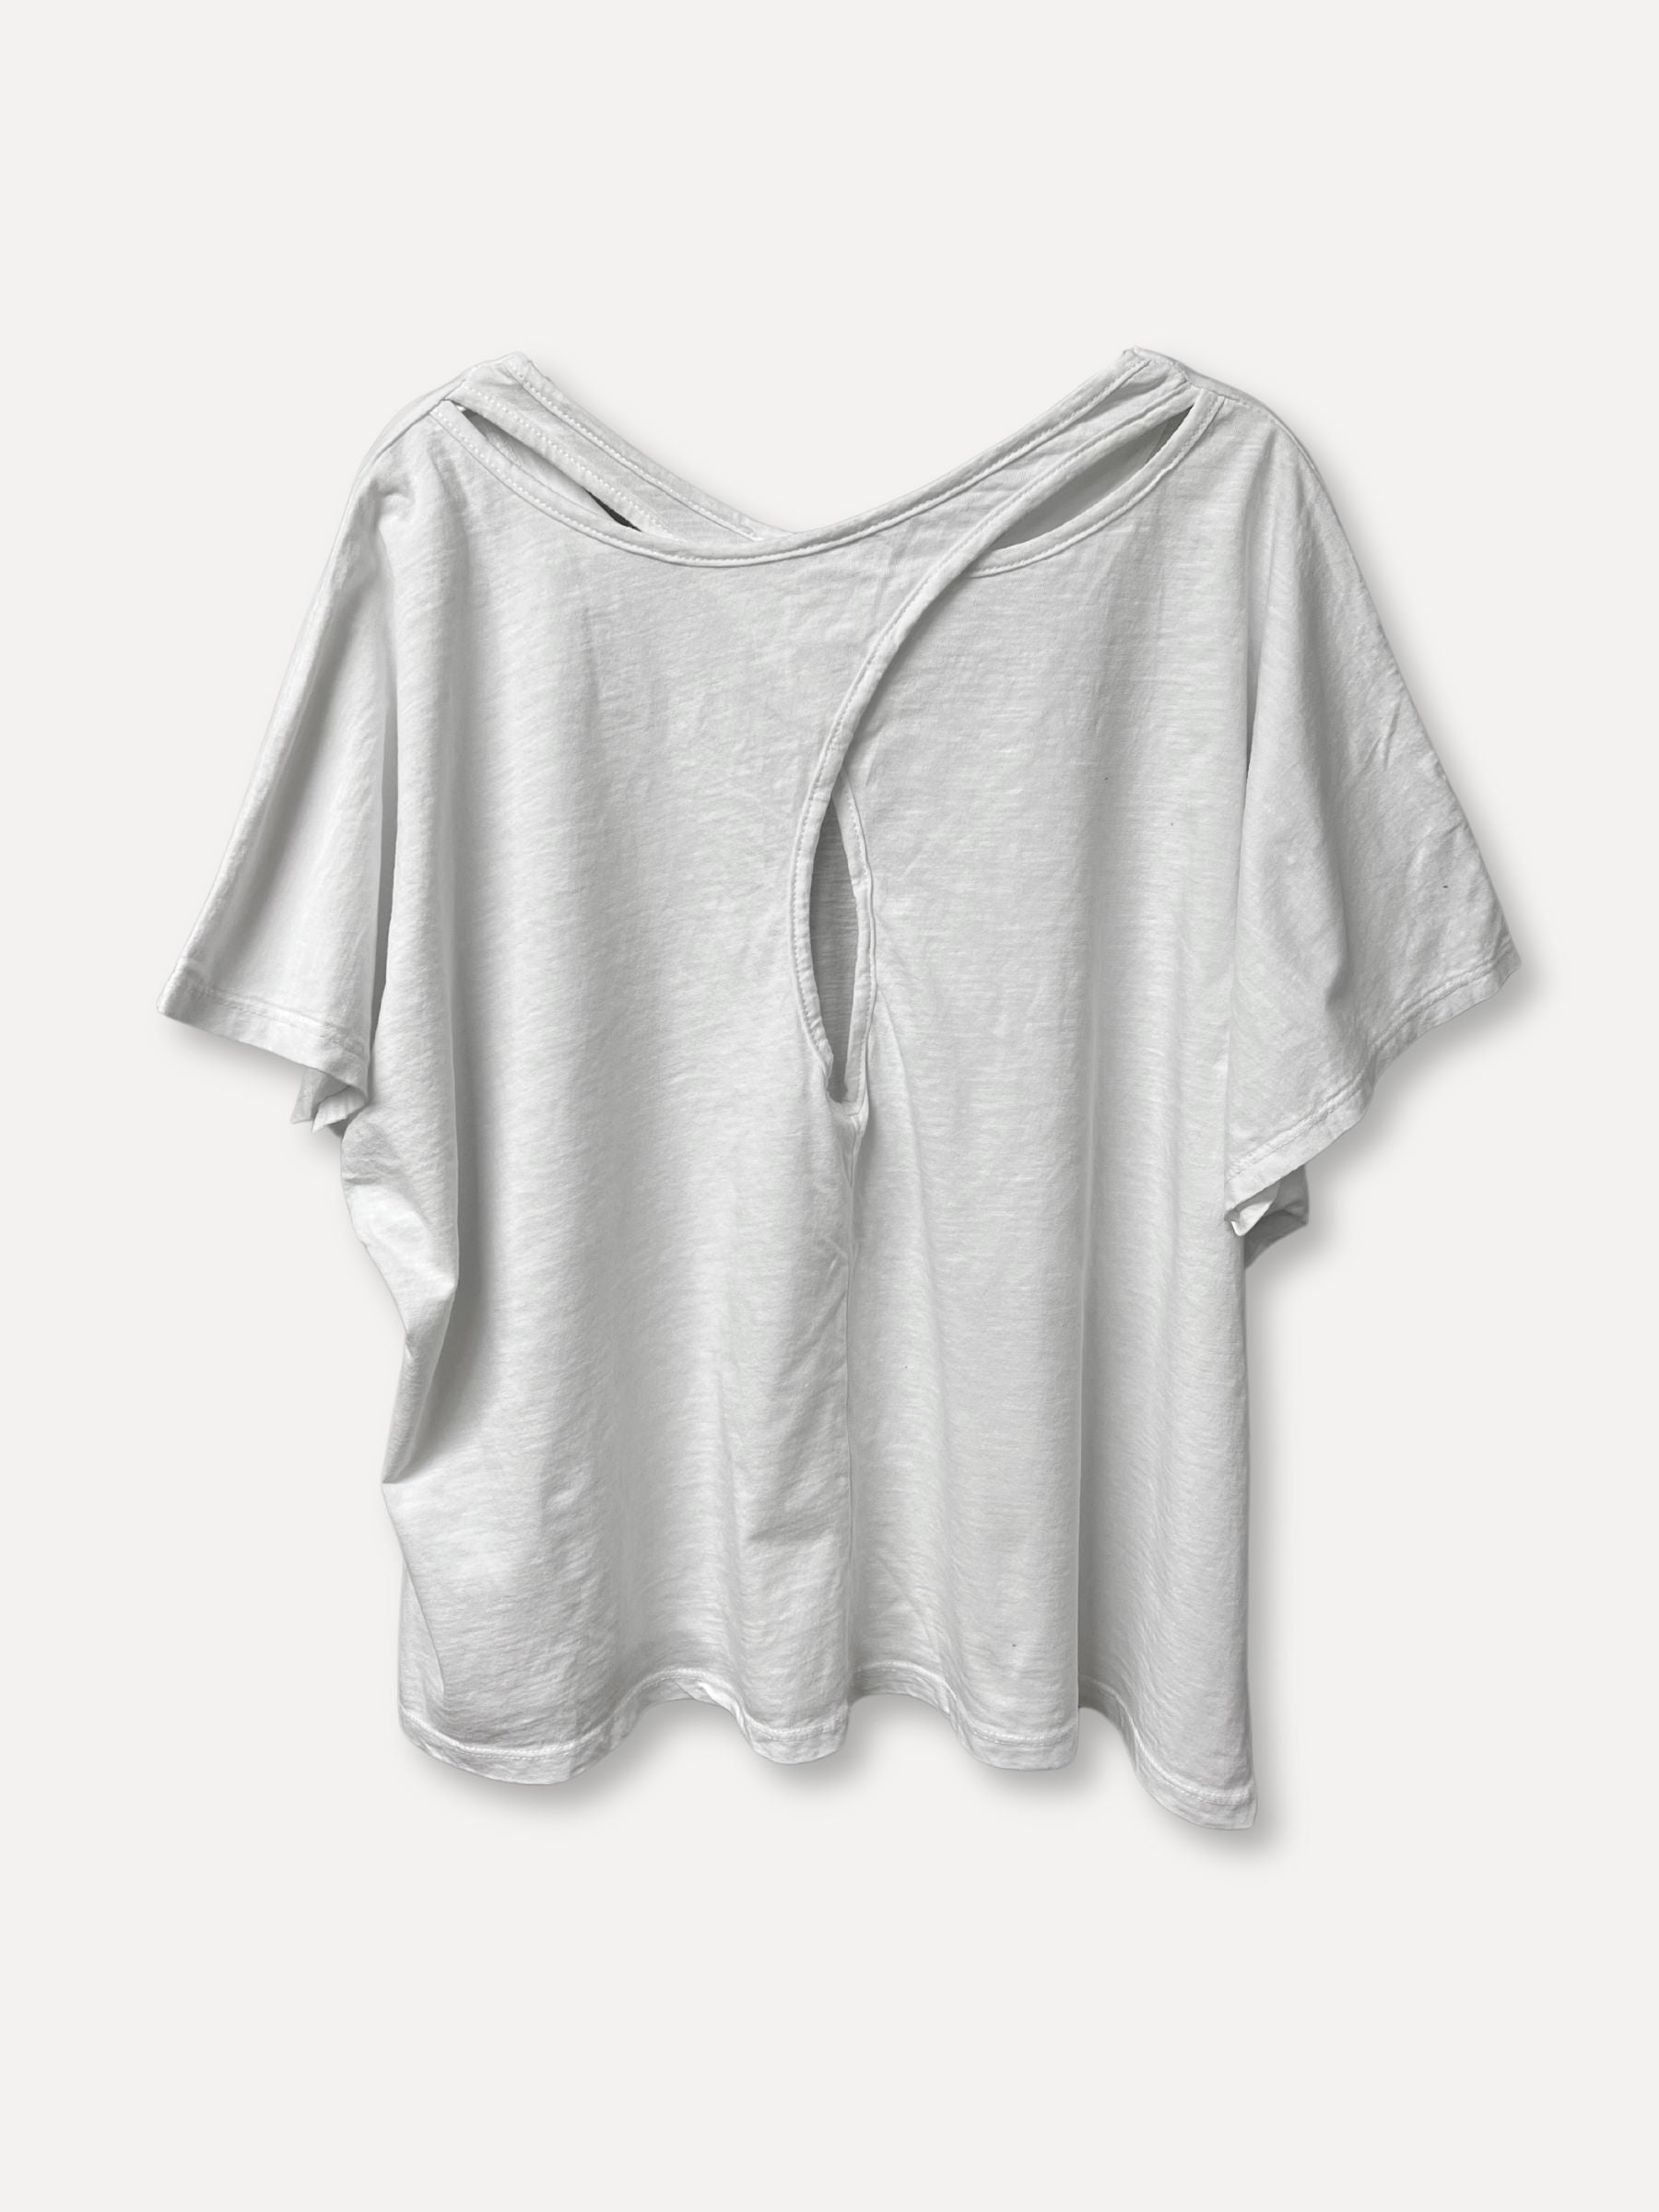 Boxing Cotton T-Shirt, White